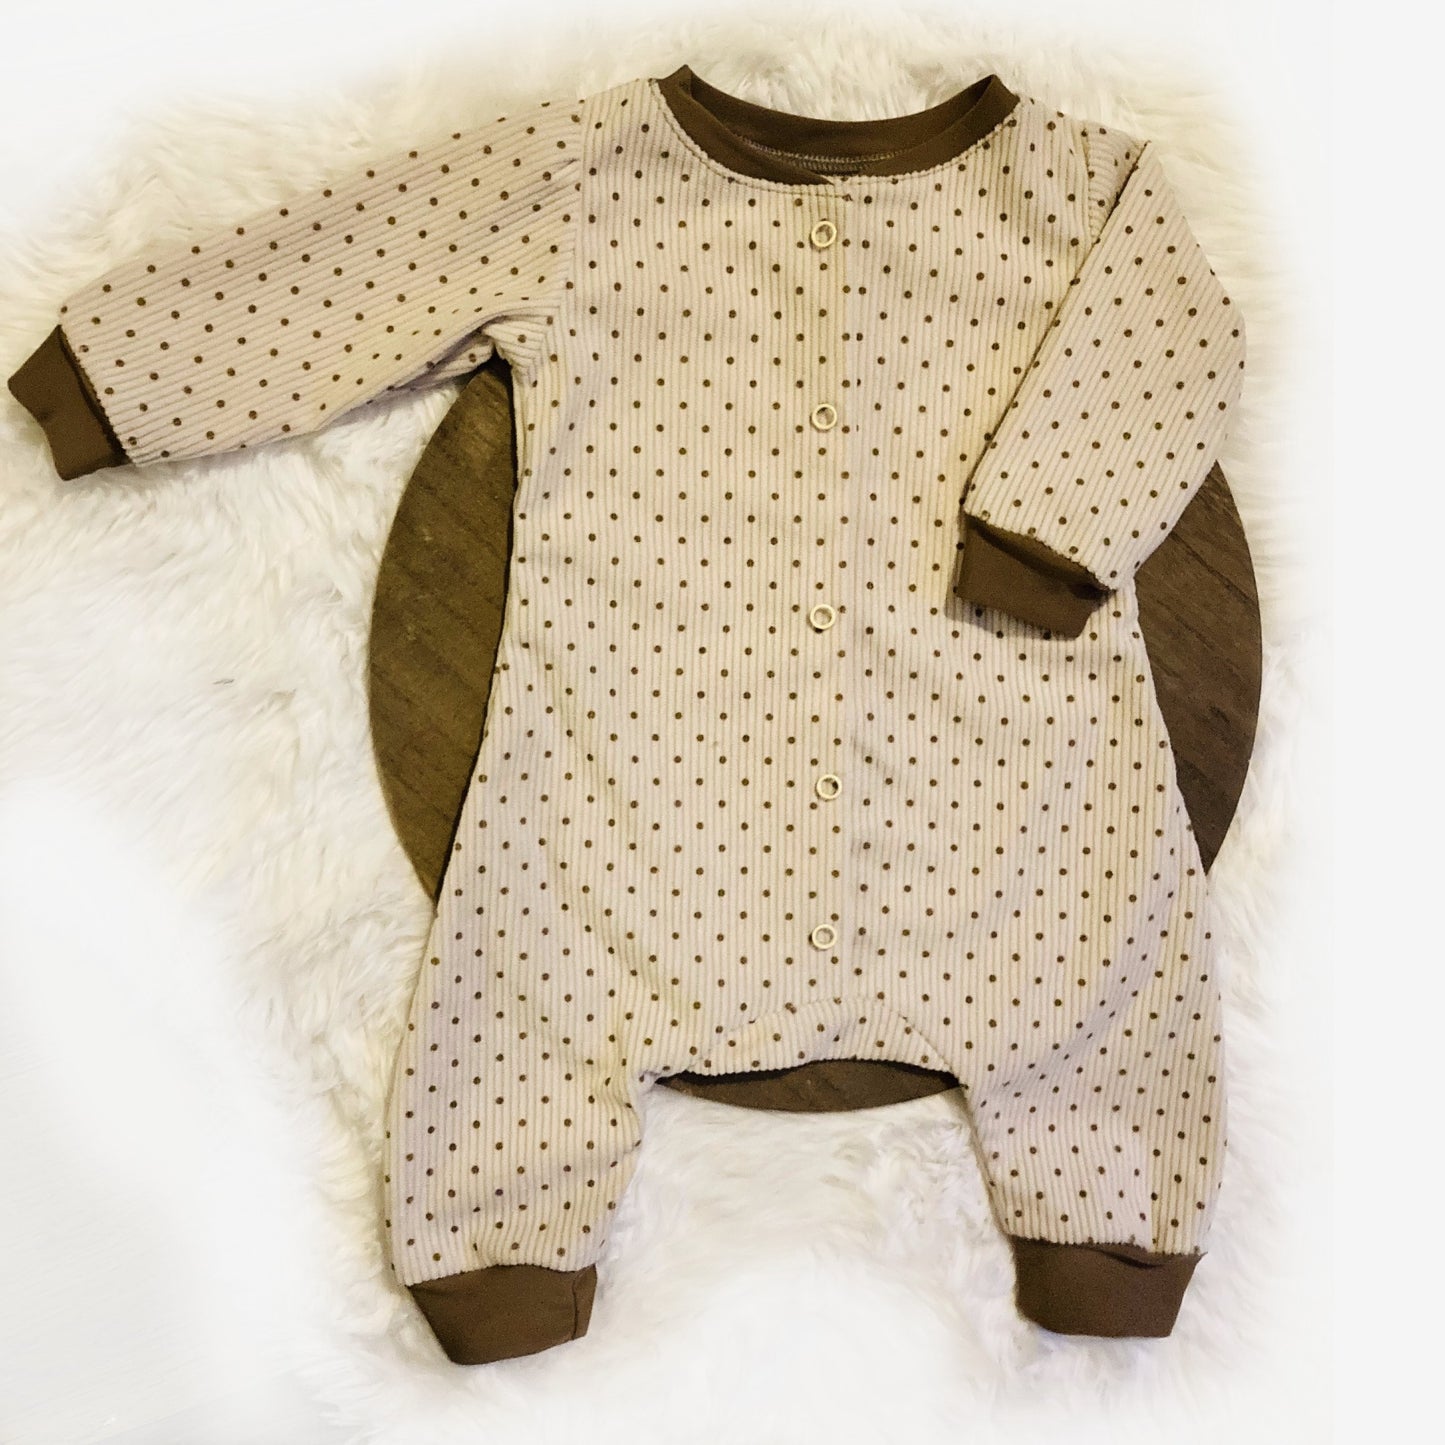 Boxpakje babypakje Bobby handgemaakte duurzame babykleding van webshop Cuteez